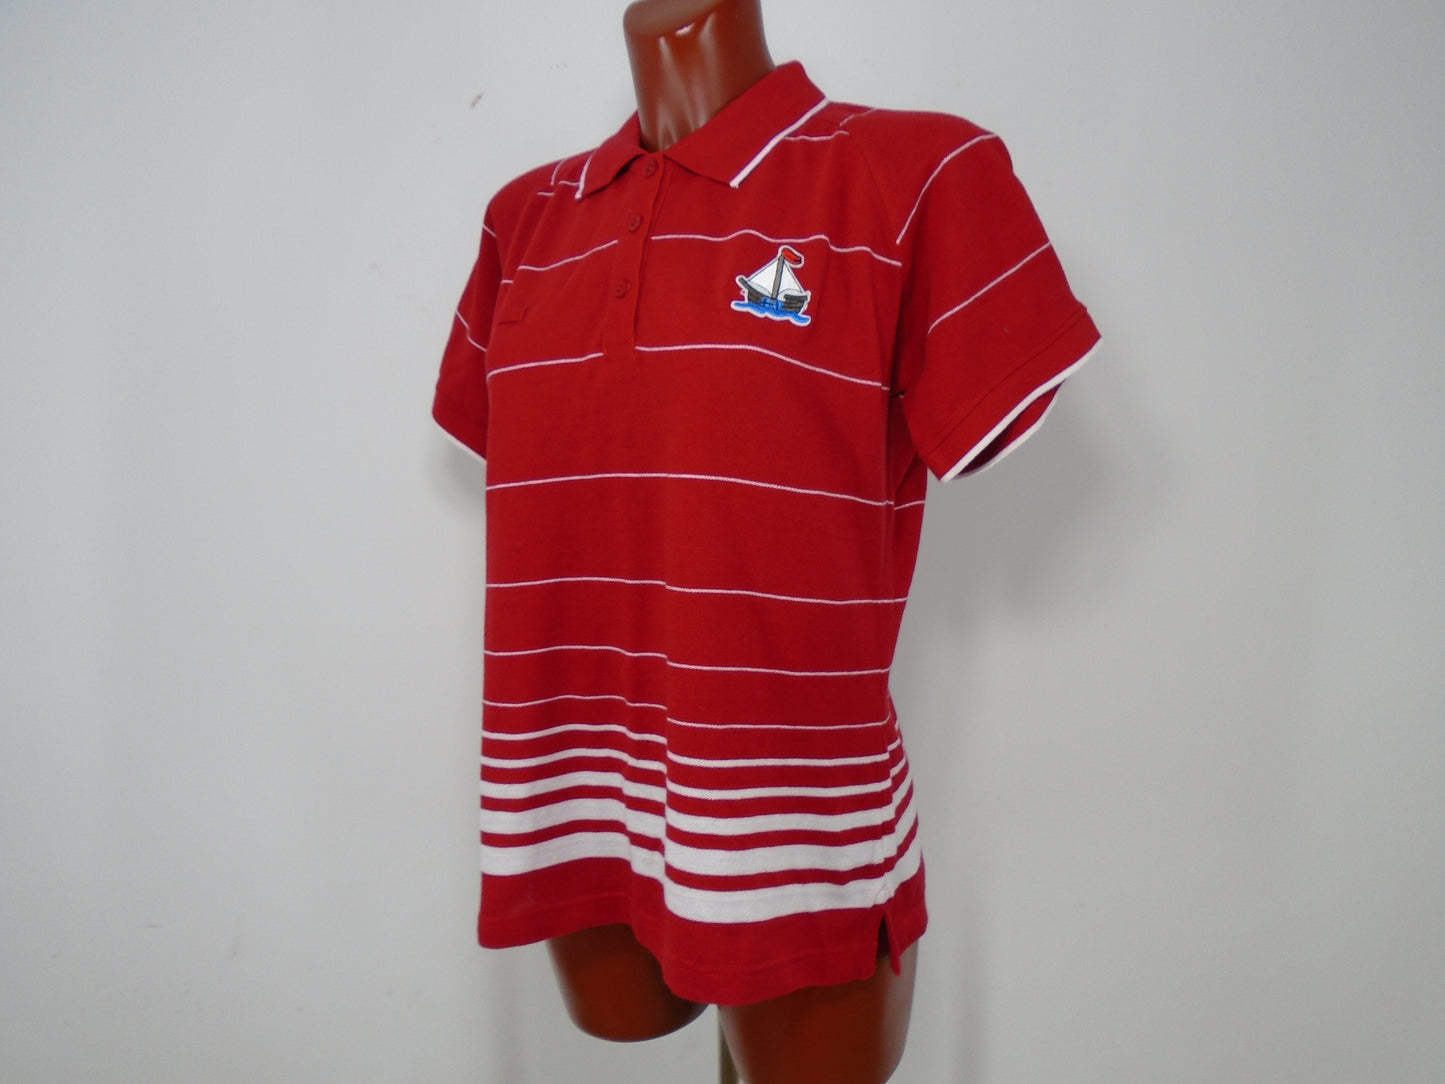 Damen-Poloshirt Unbekannte Marke. Rot. XL. Gebraucht. Sehr guter Zustand